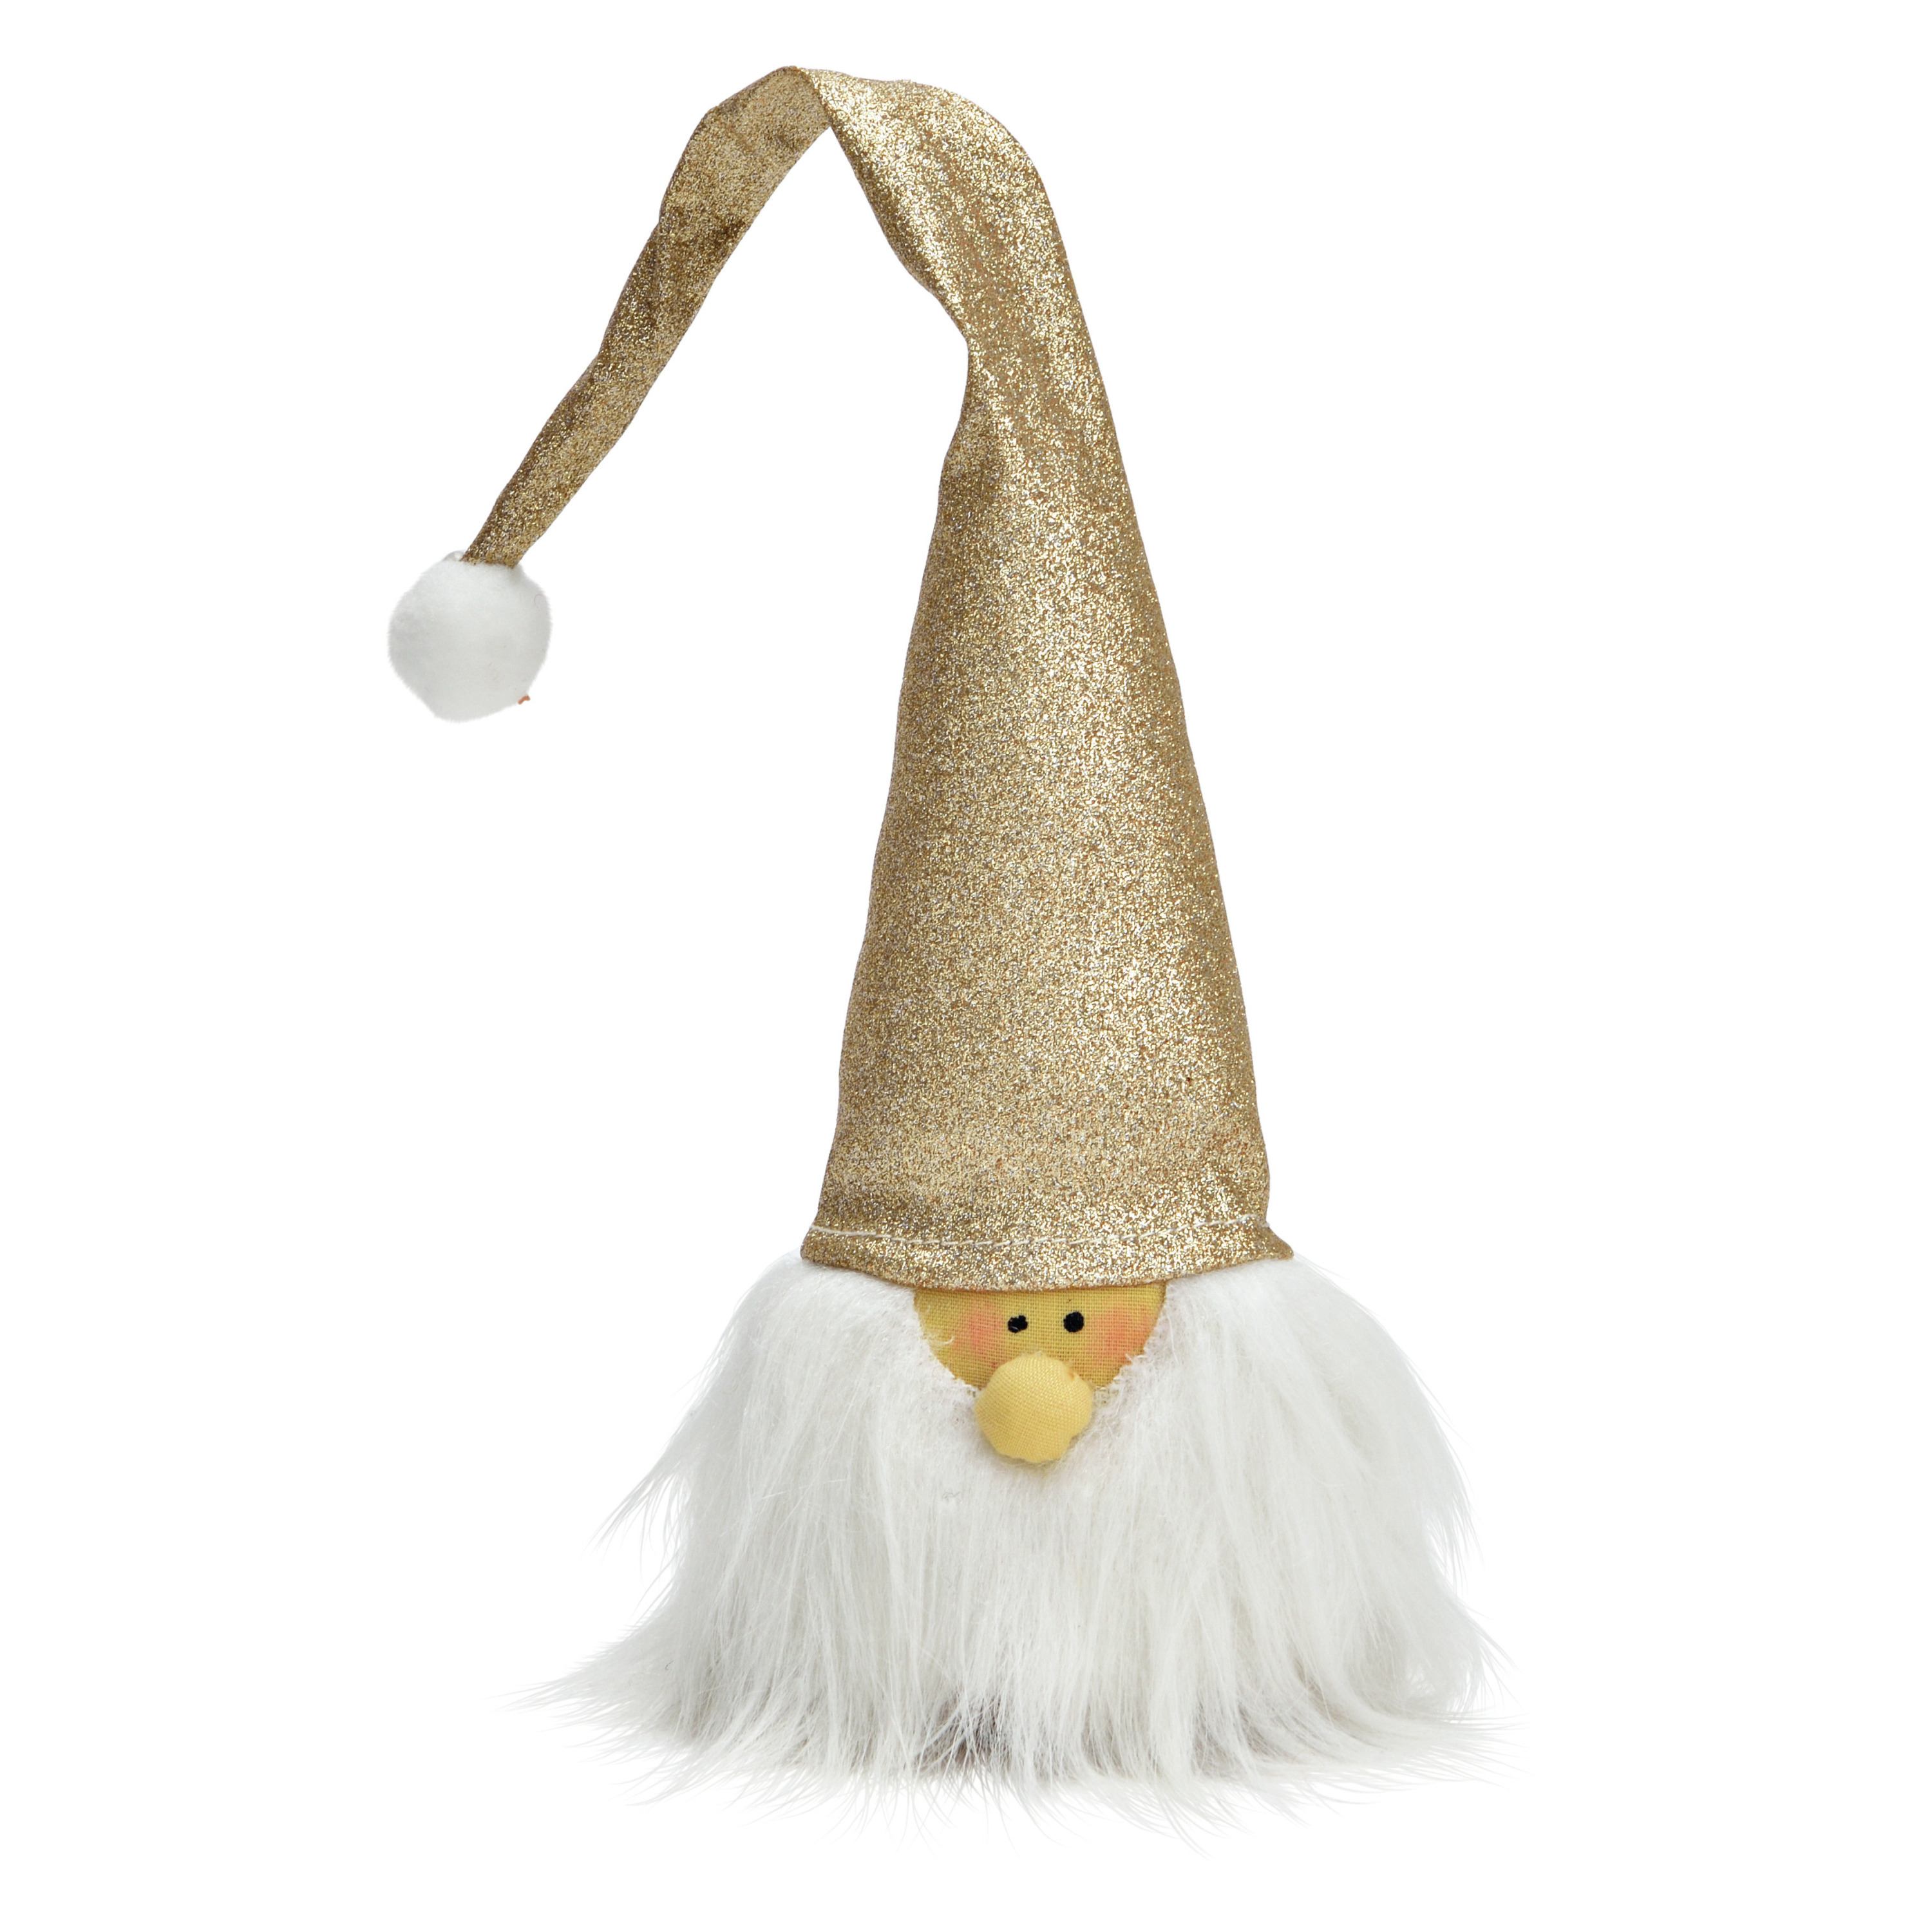 G. Wurm Pluche kerstmanÃÂ gnome-kabouter knuffelÃÂ pop 29 cm champagne